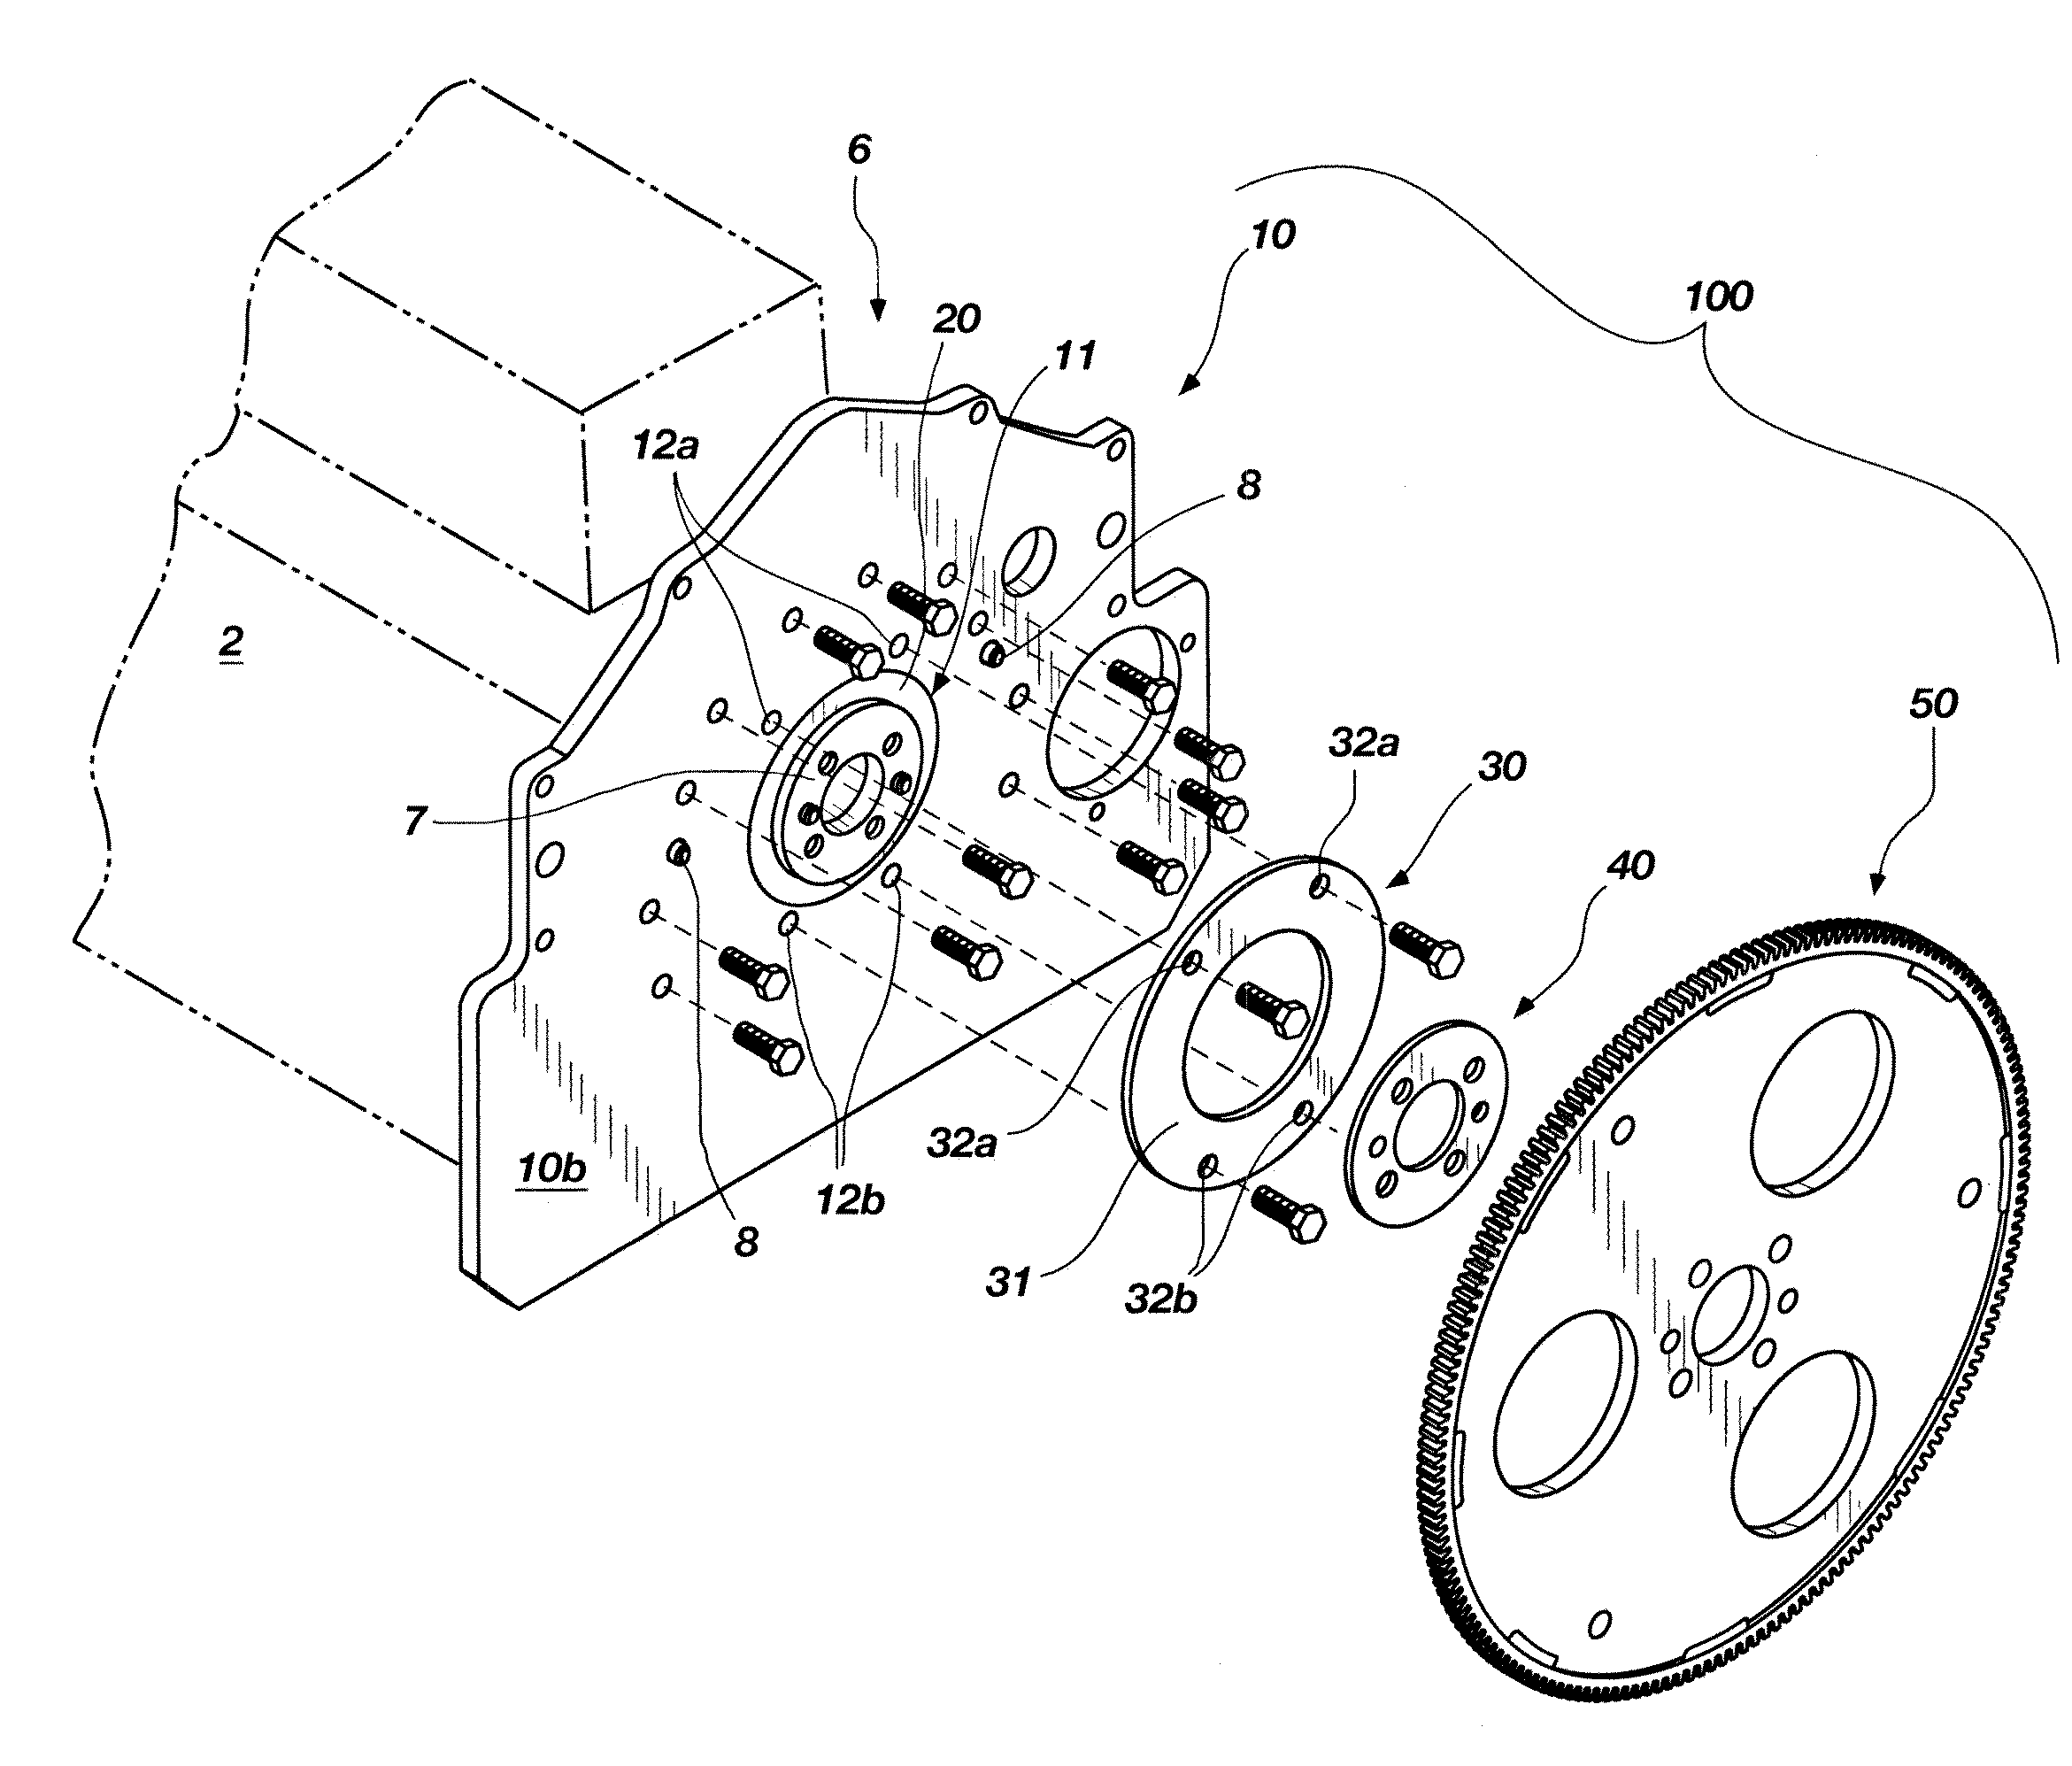 Transmission to engine adapter kit